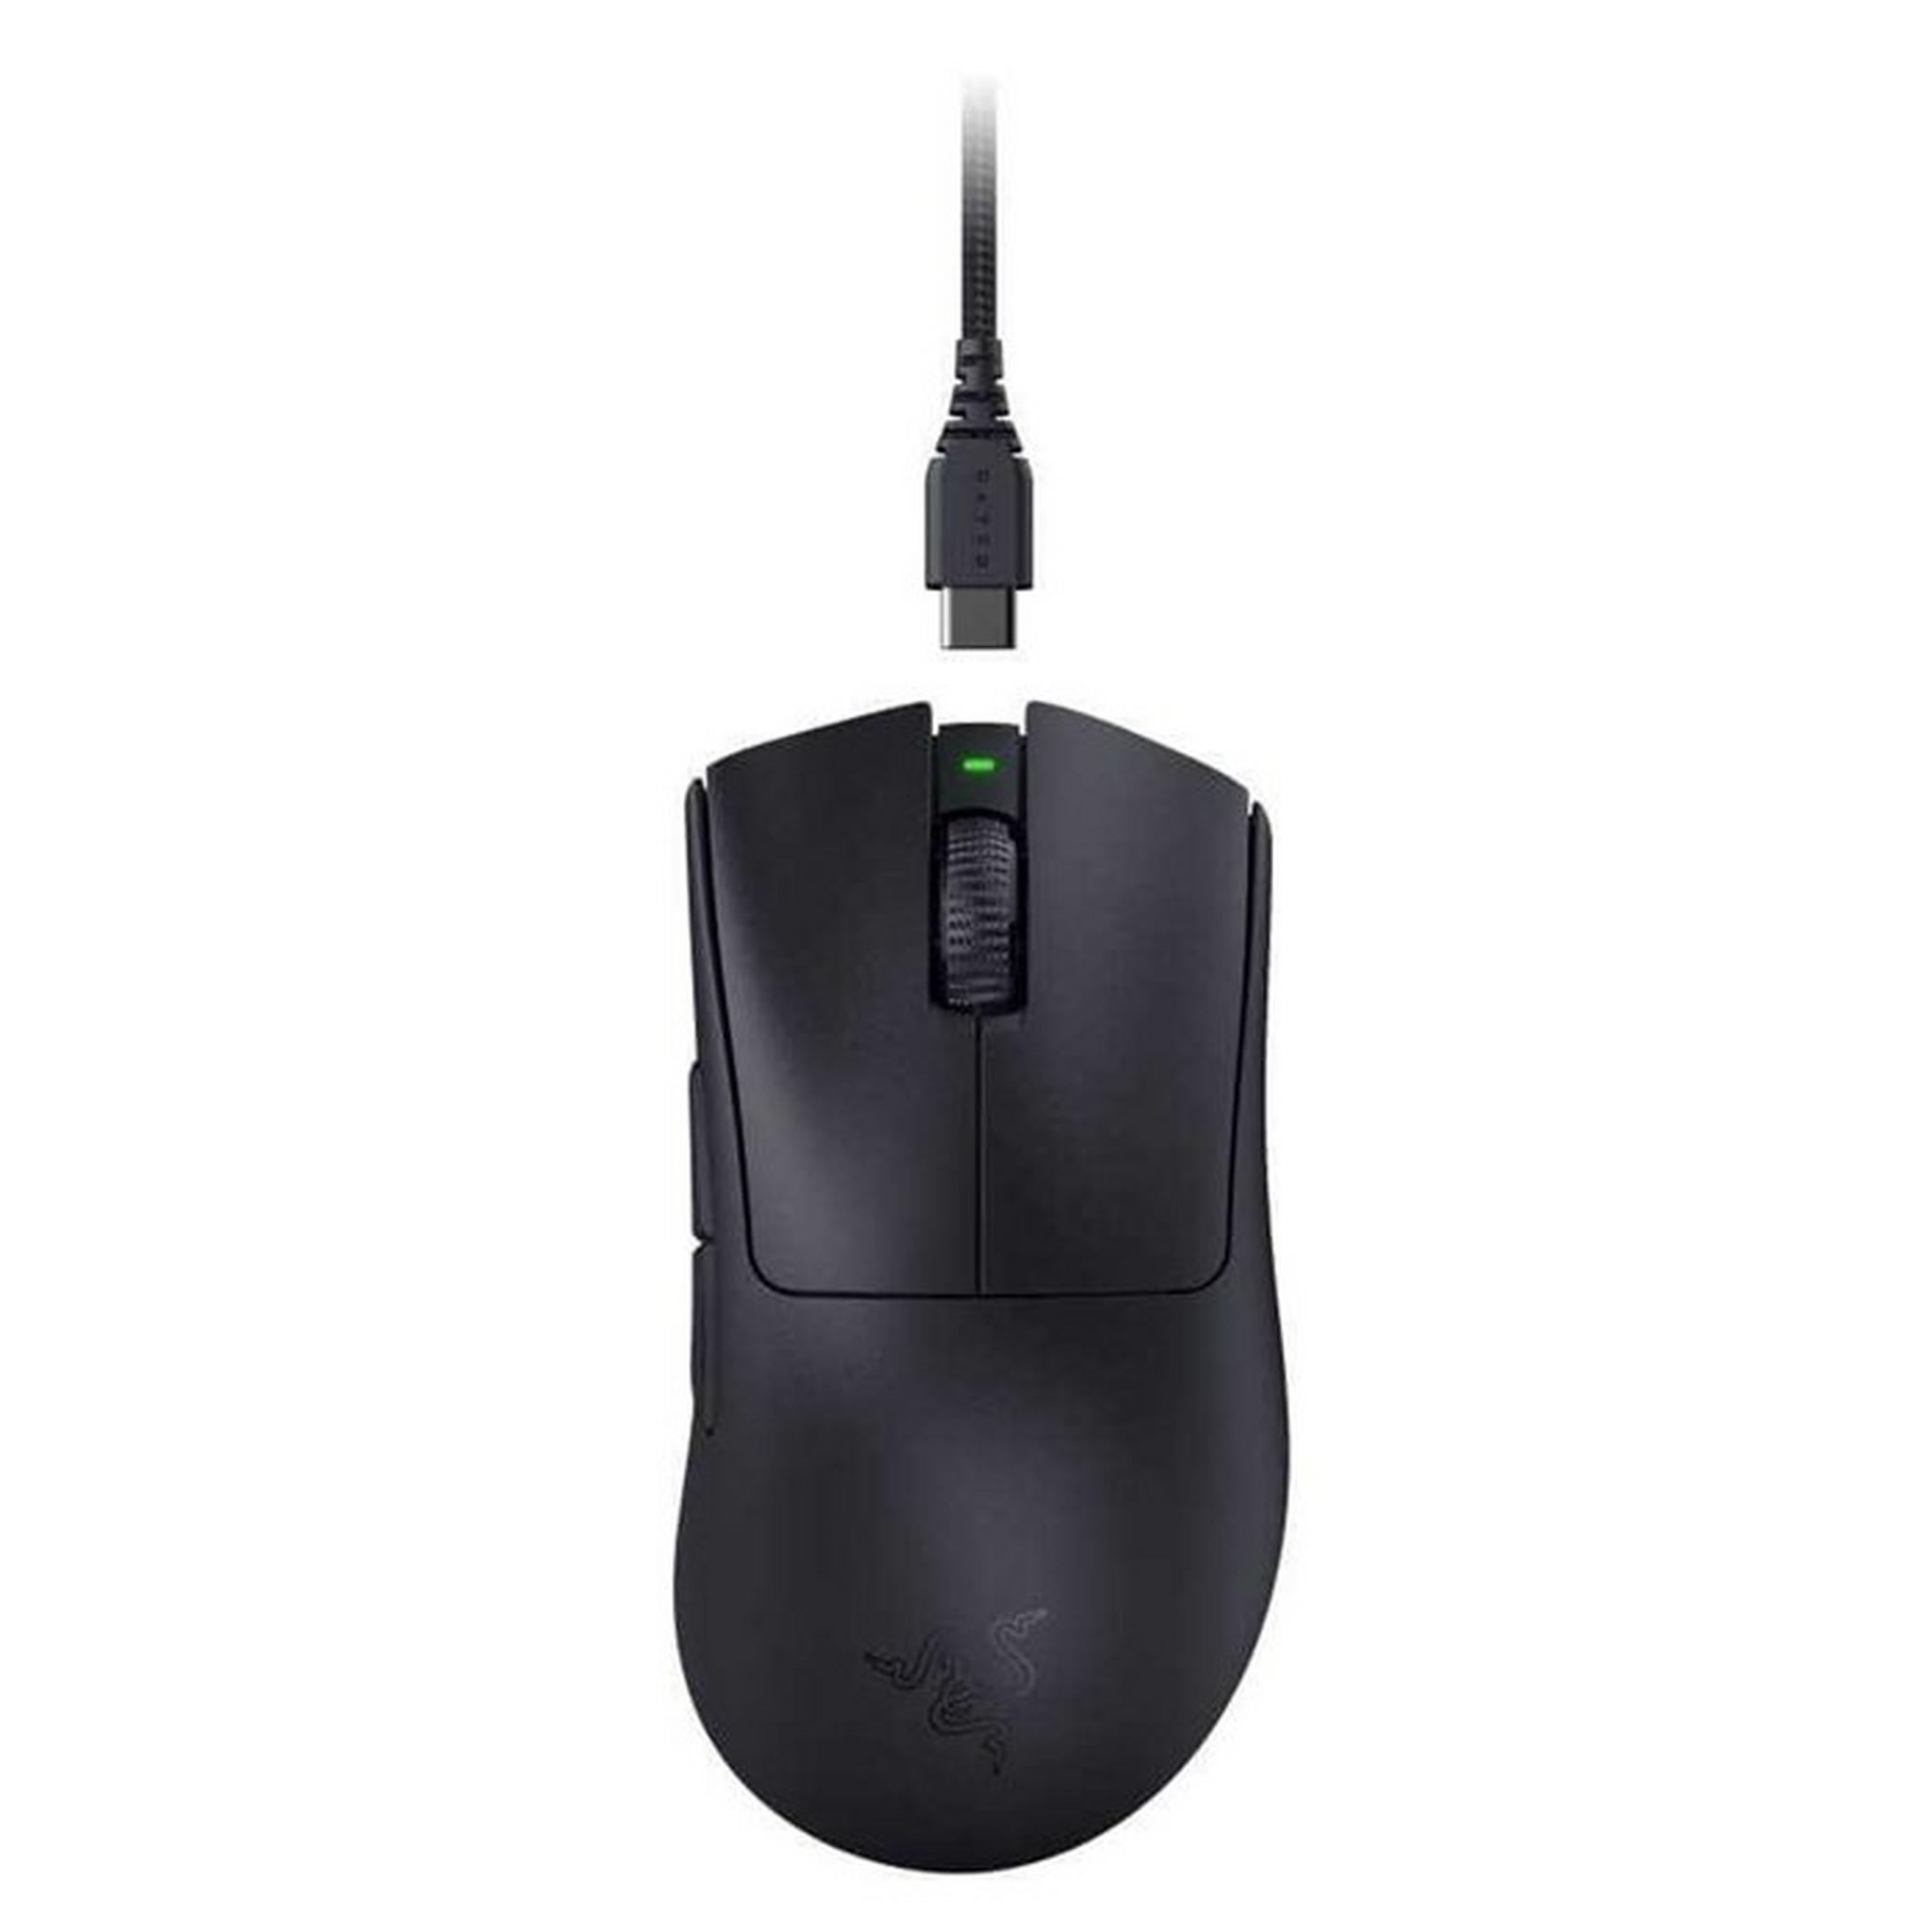 Razer DeathAdder V3 Pro Hyperpolling Wireless Gaming Mouse, RZ01-04630300-R3WL – Black